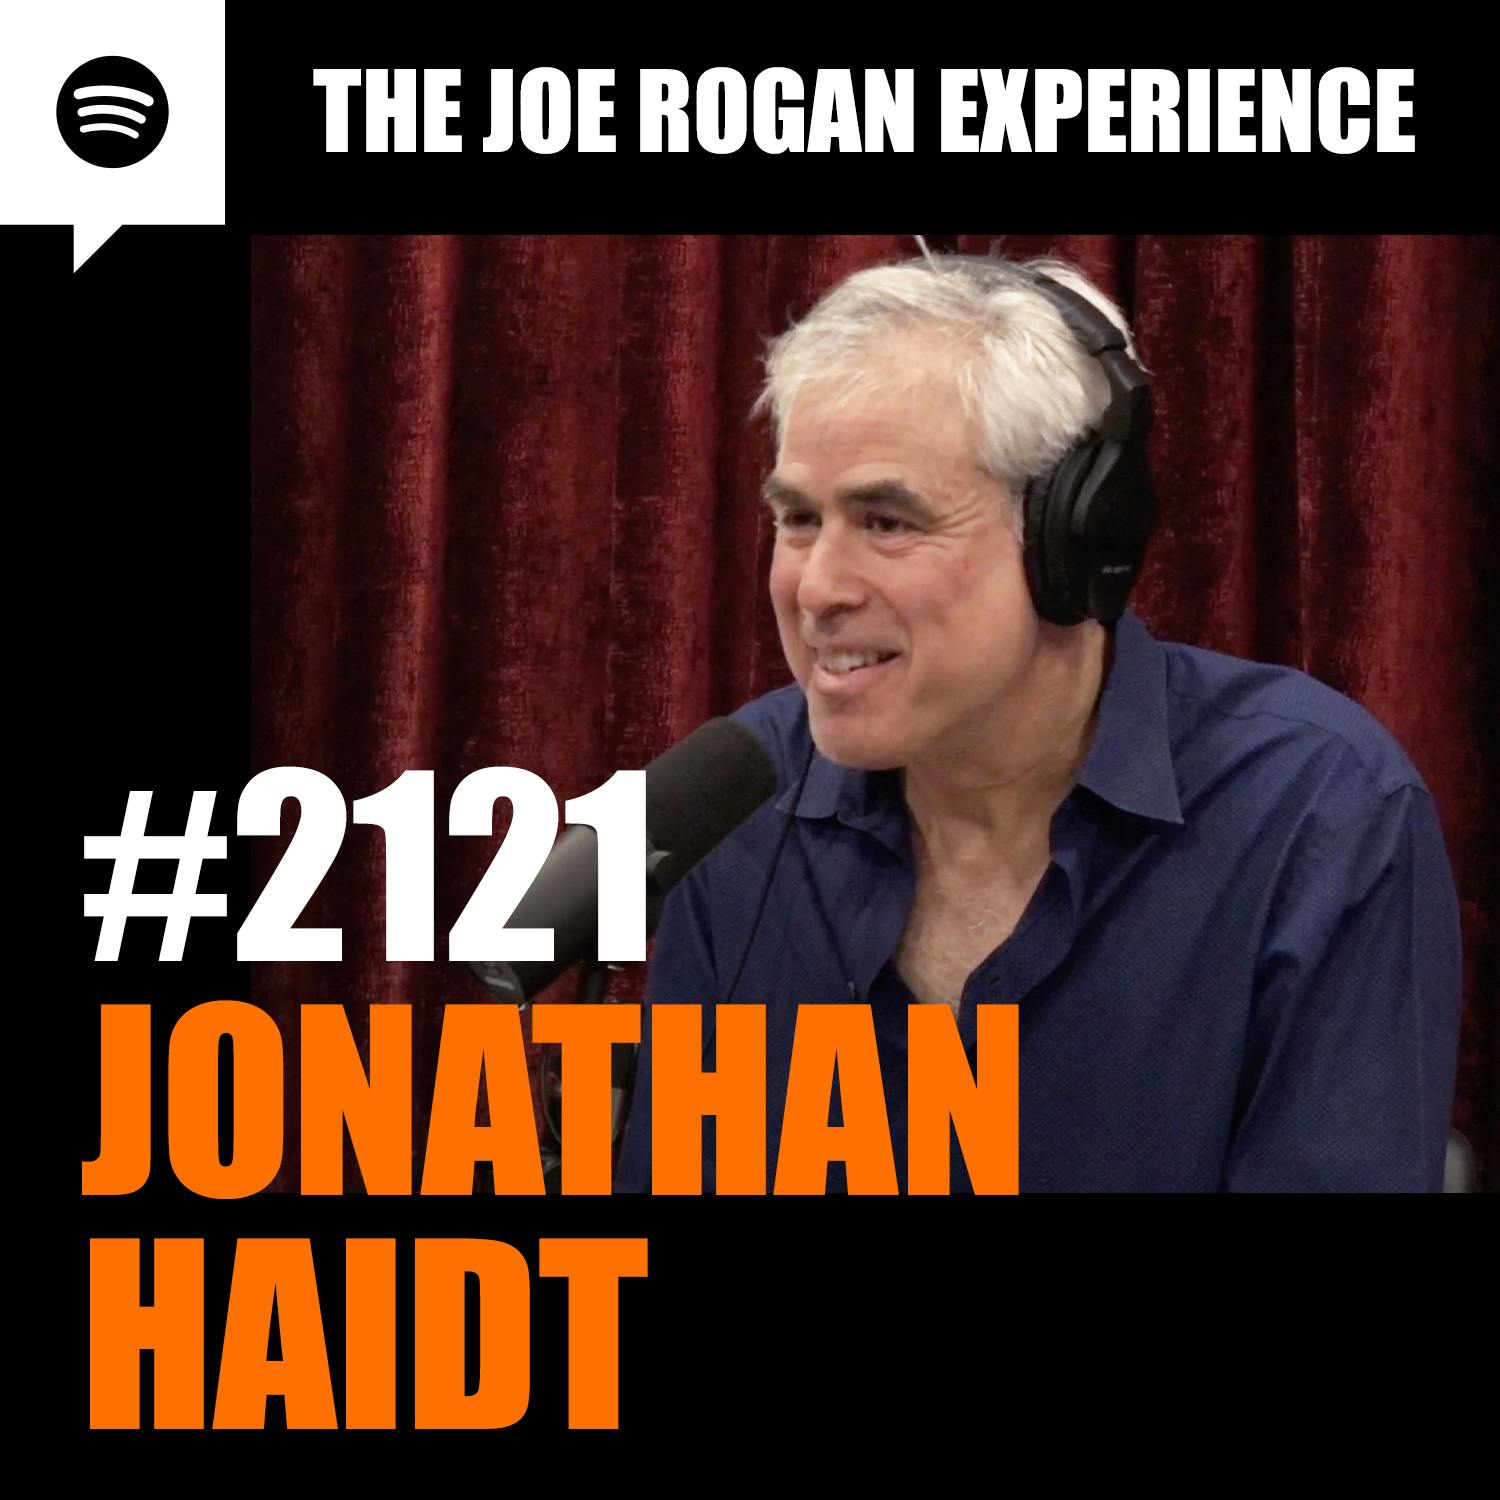 #2121 - Jonathan Haidt